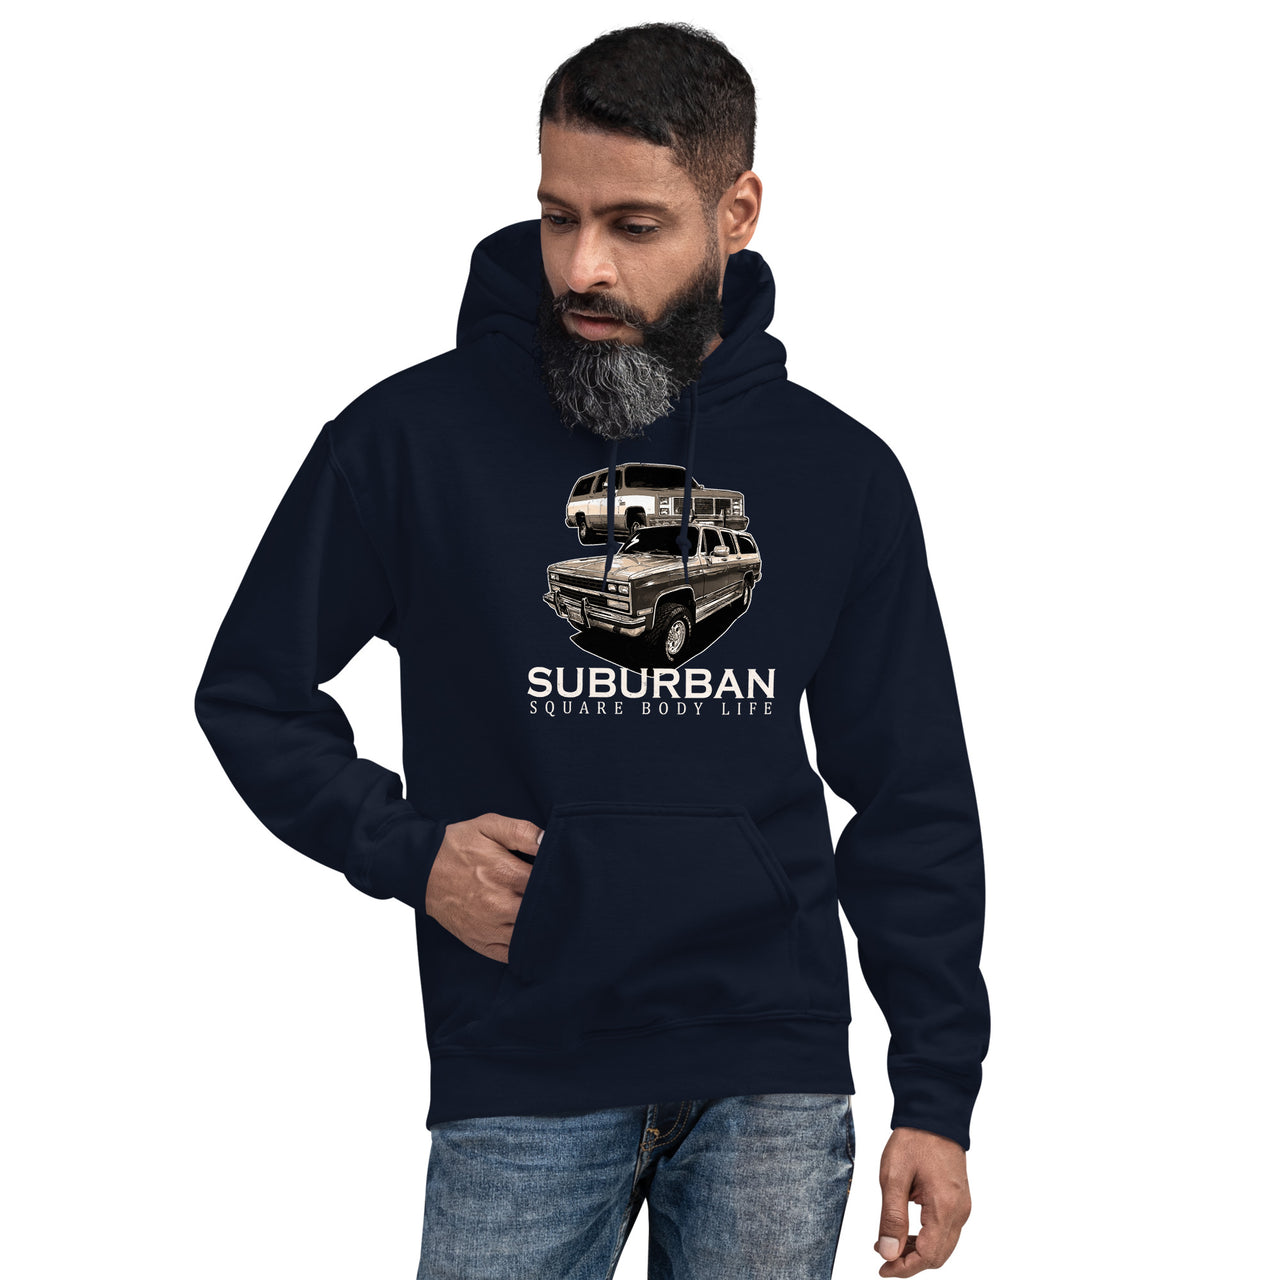 squarebody suburban truck hoodie modeled in navy